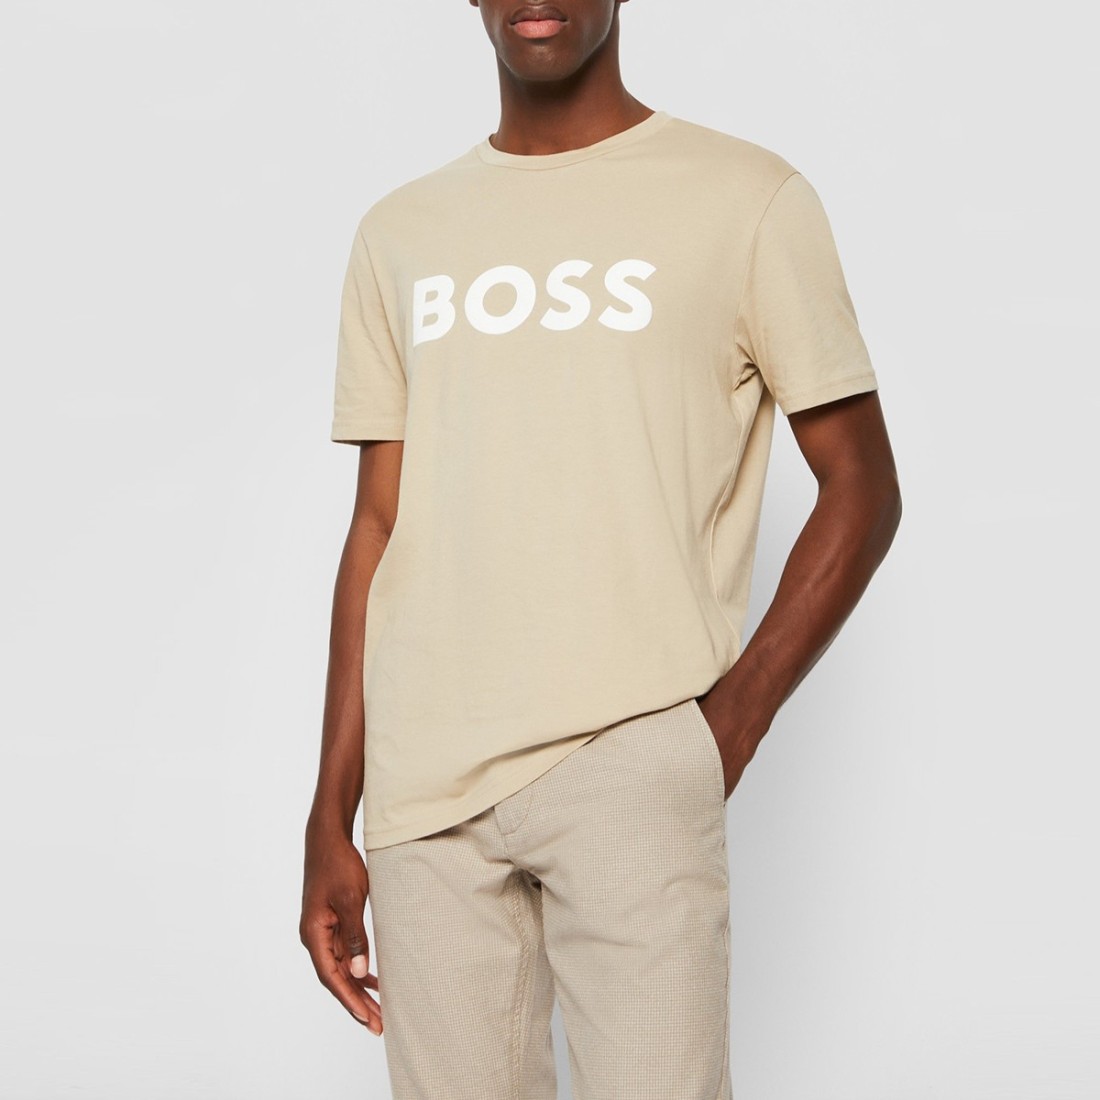 Image of BOSS - T-shirt Thinking - Colore: Beige,Taglia: XL